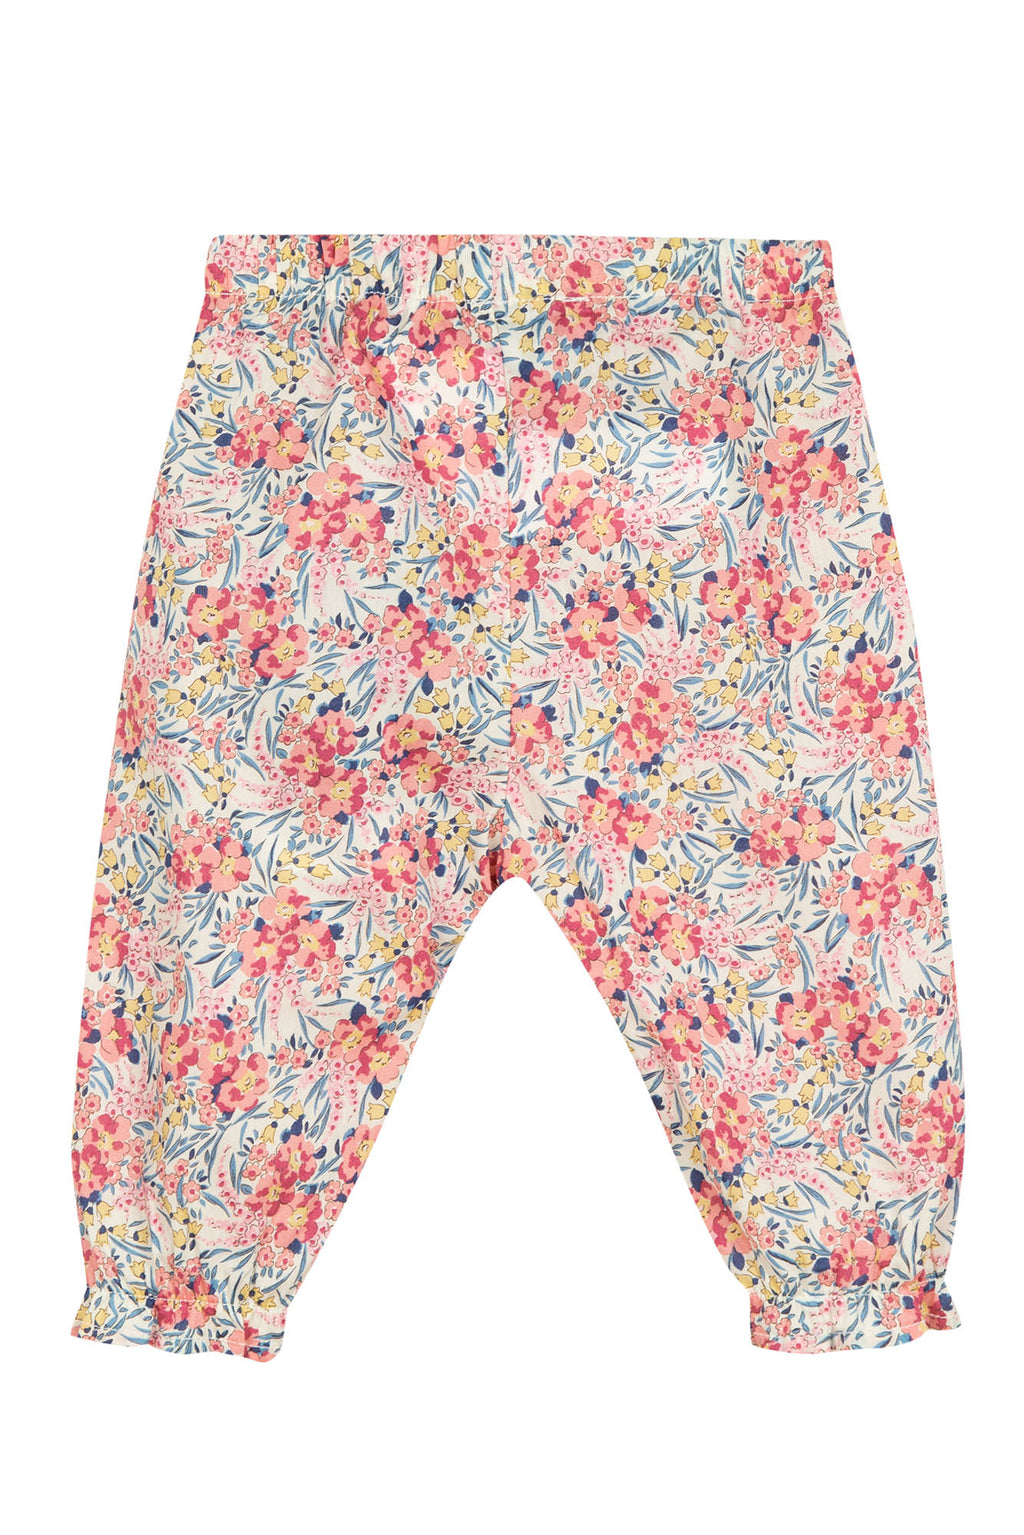 Trousers - Cotton fabric Liberty poppy